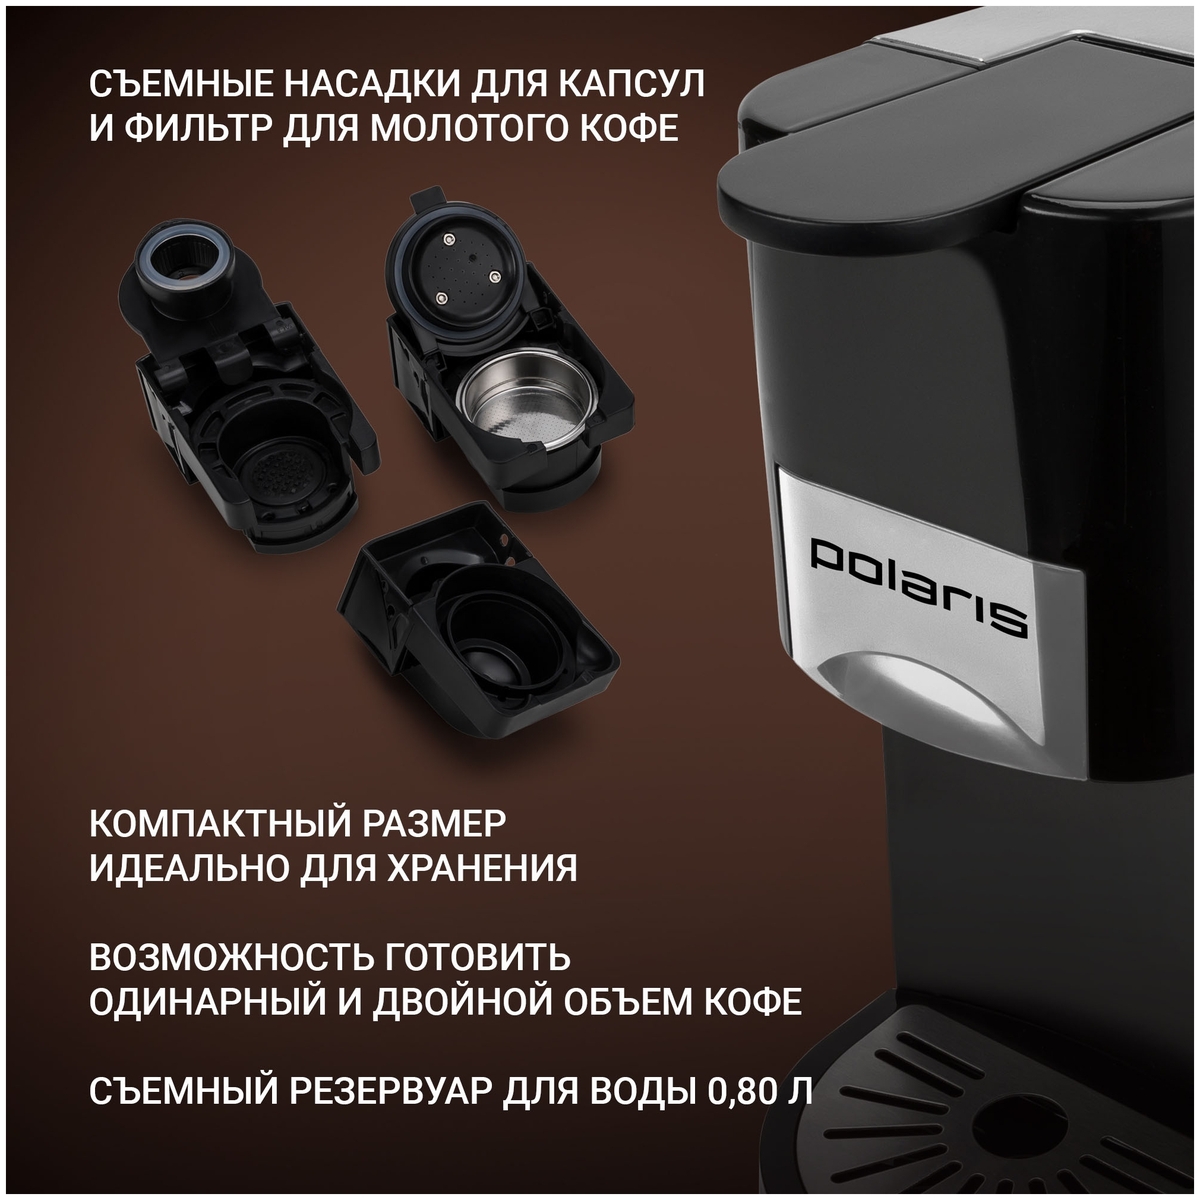 Кофеварка POLARIS PCM 2020 3-in-1 Казахстан